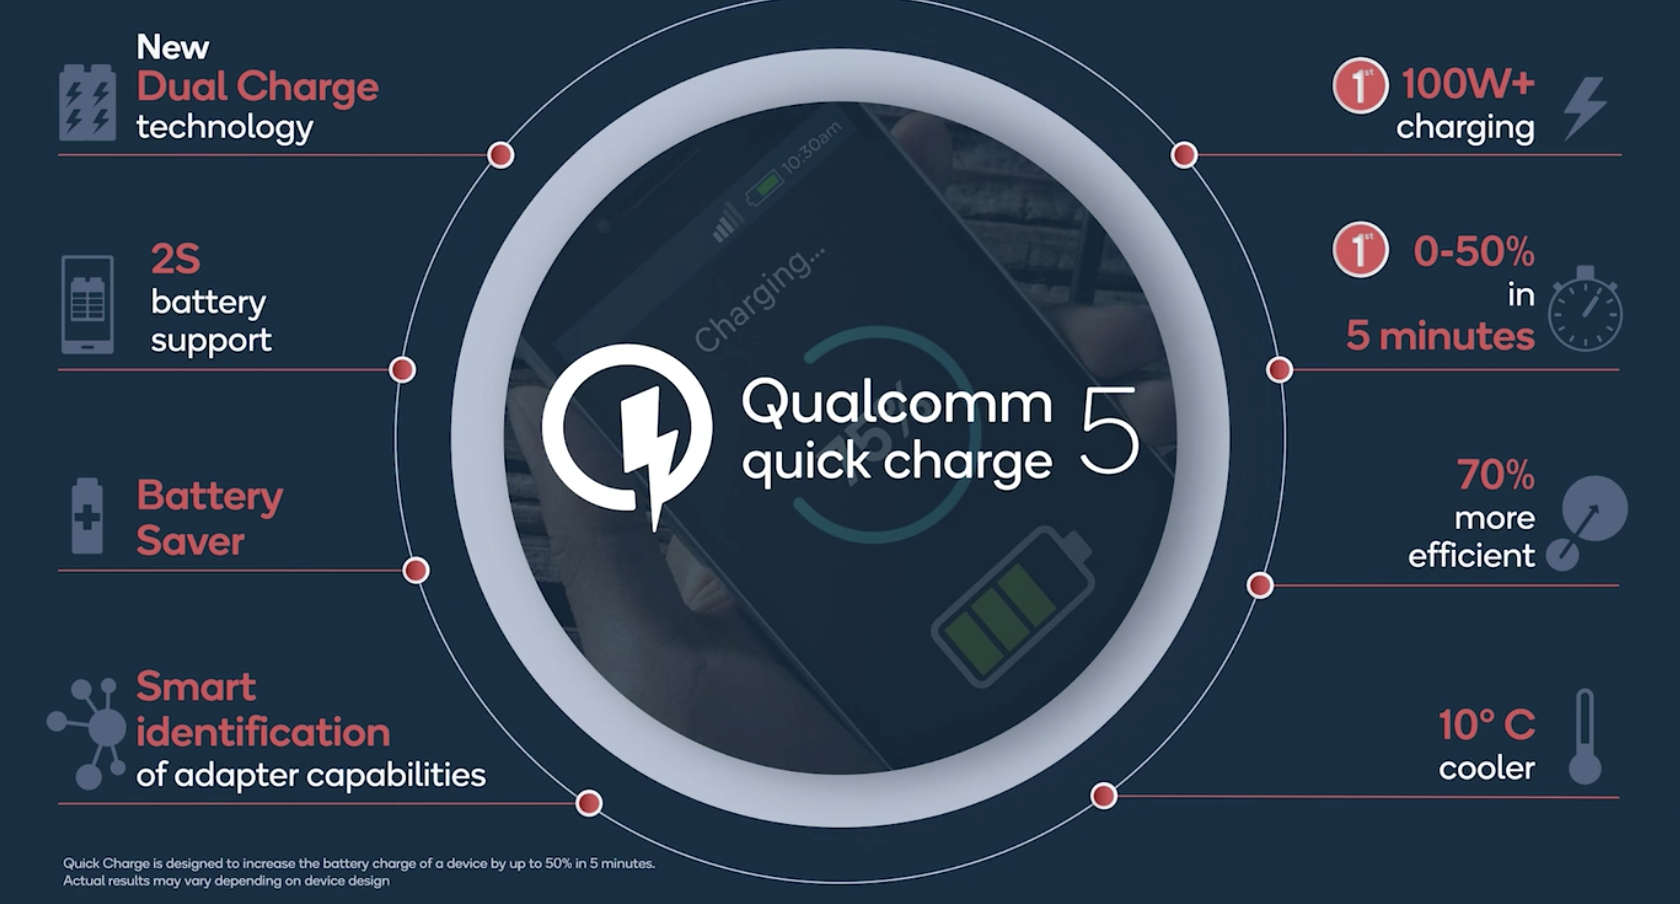 procesor Qualcomm Snapdragon 8 Gen1 obsłuży technologię Quick Charge o mocy nawet 150 W